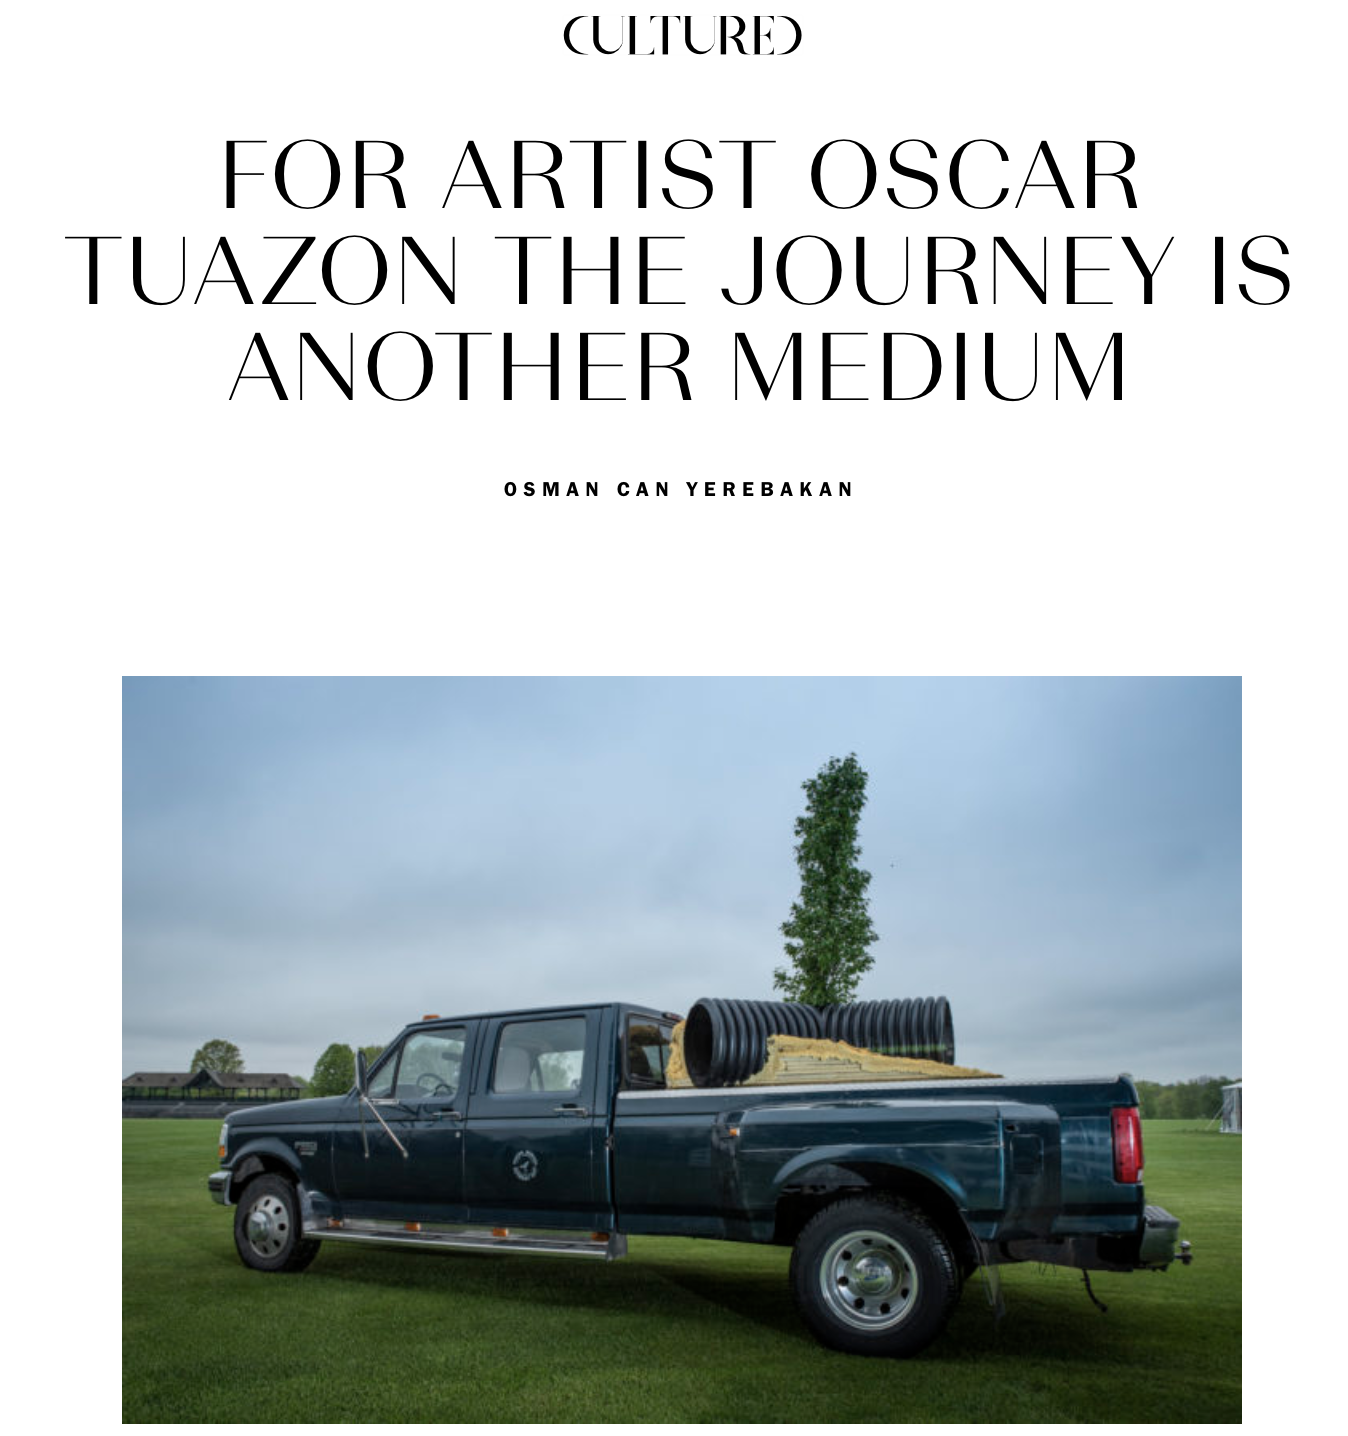 Oscar Tuazon Featured in Cultured Magazine